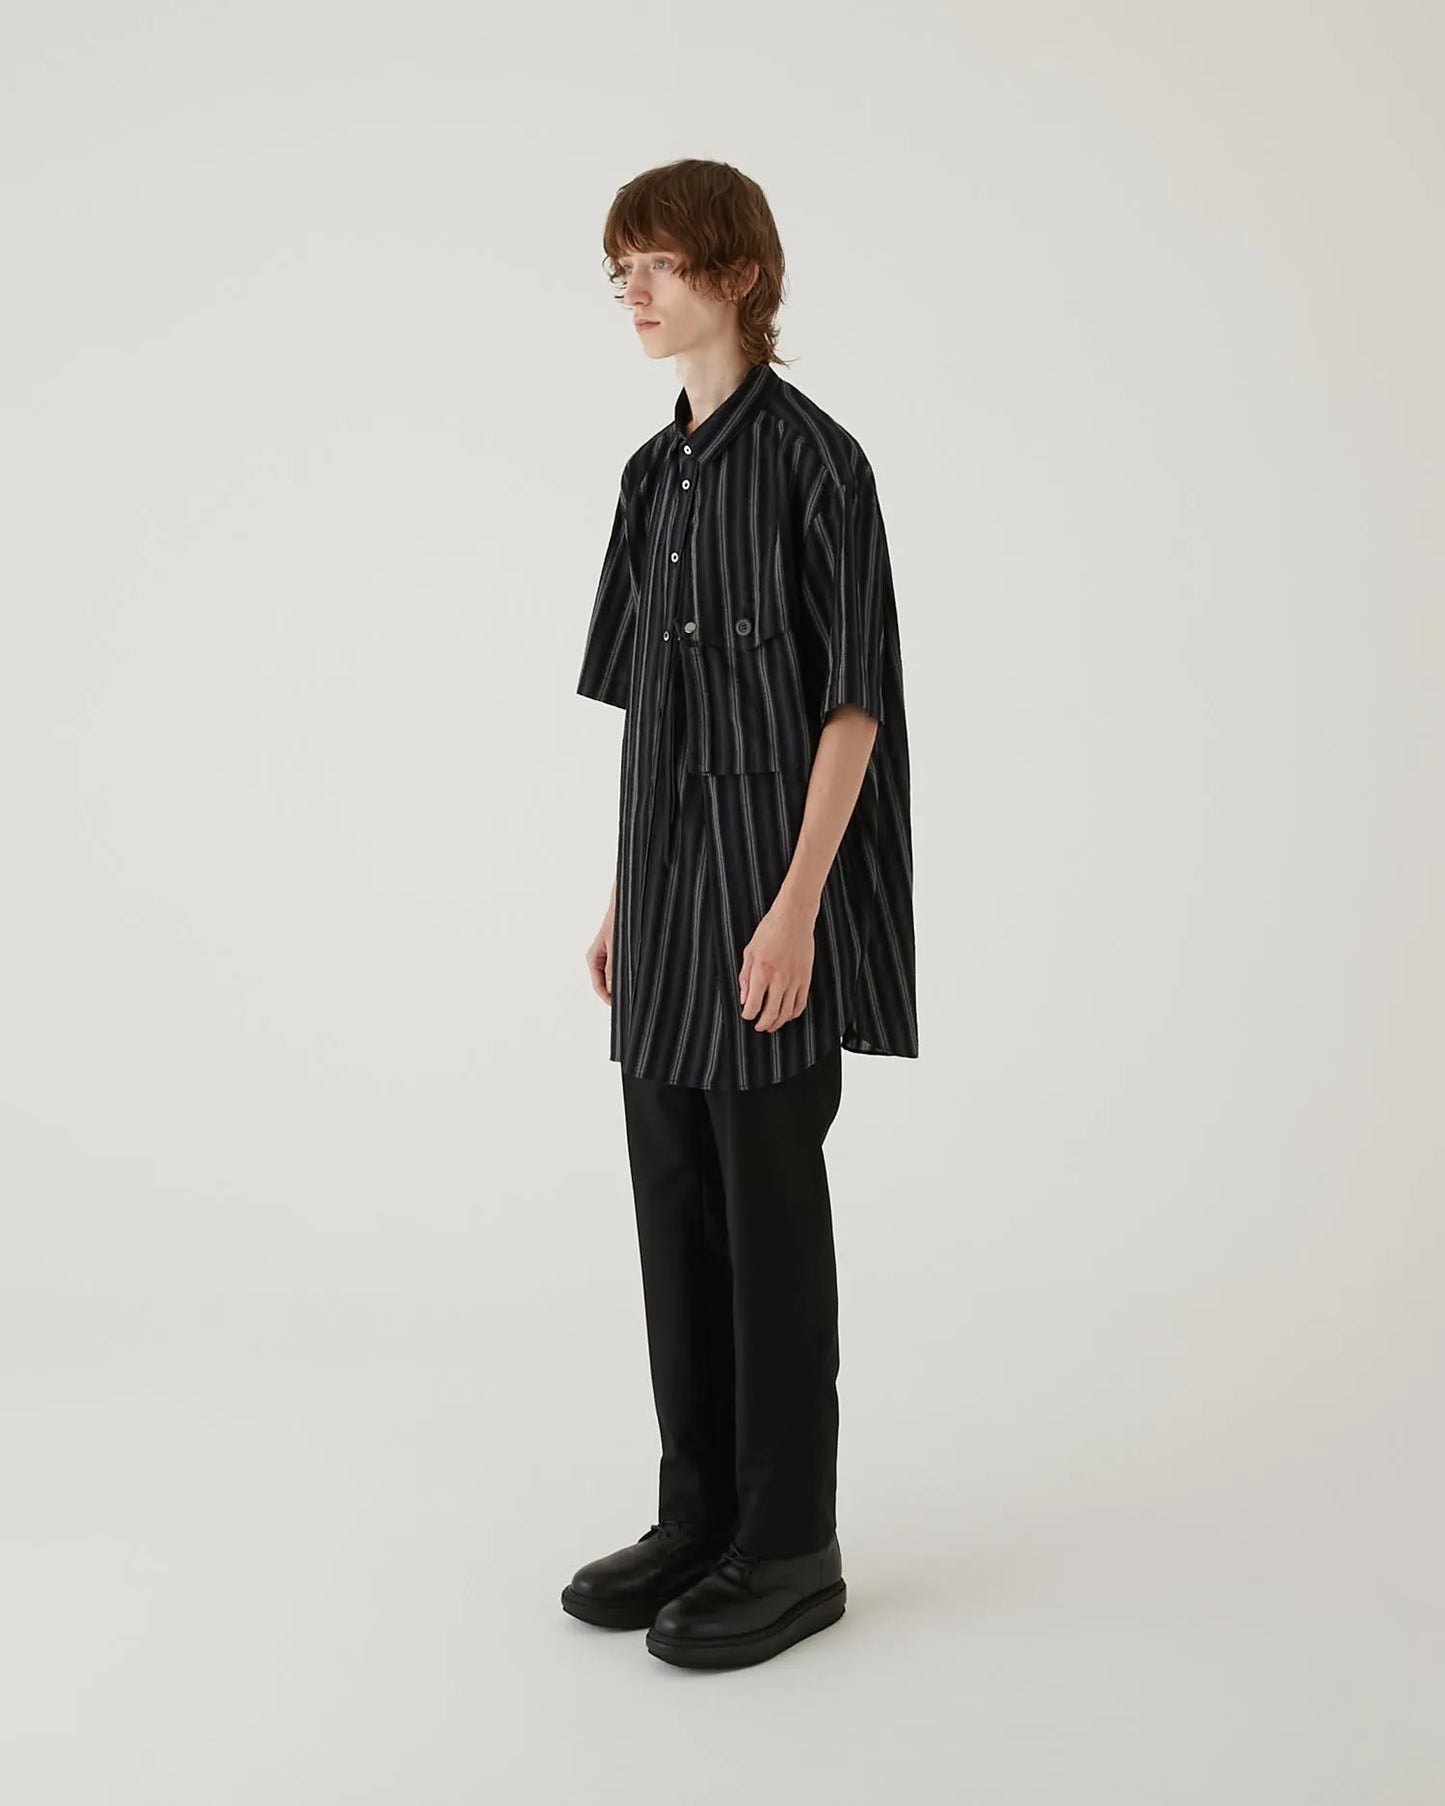 OMBRE STRIPE S/S DRESS SHIRT BLACK